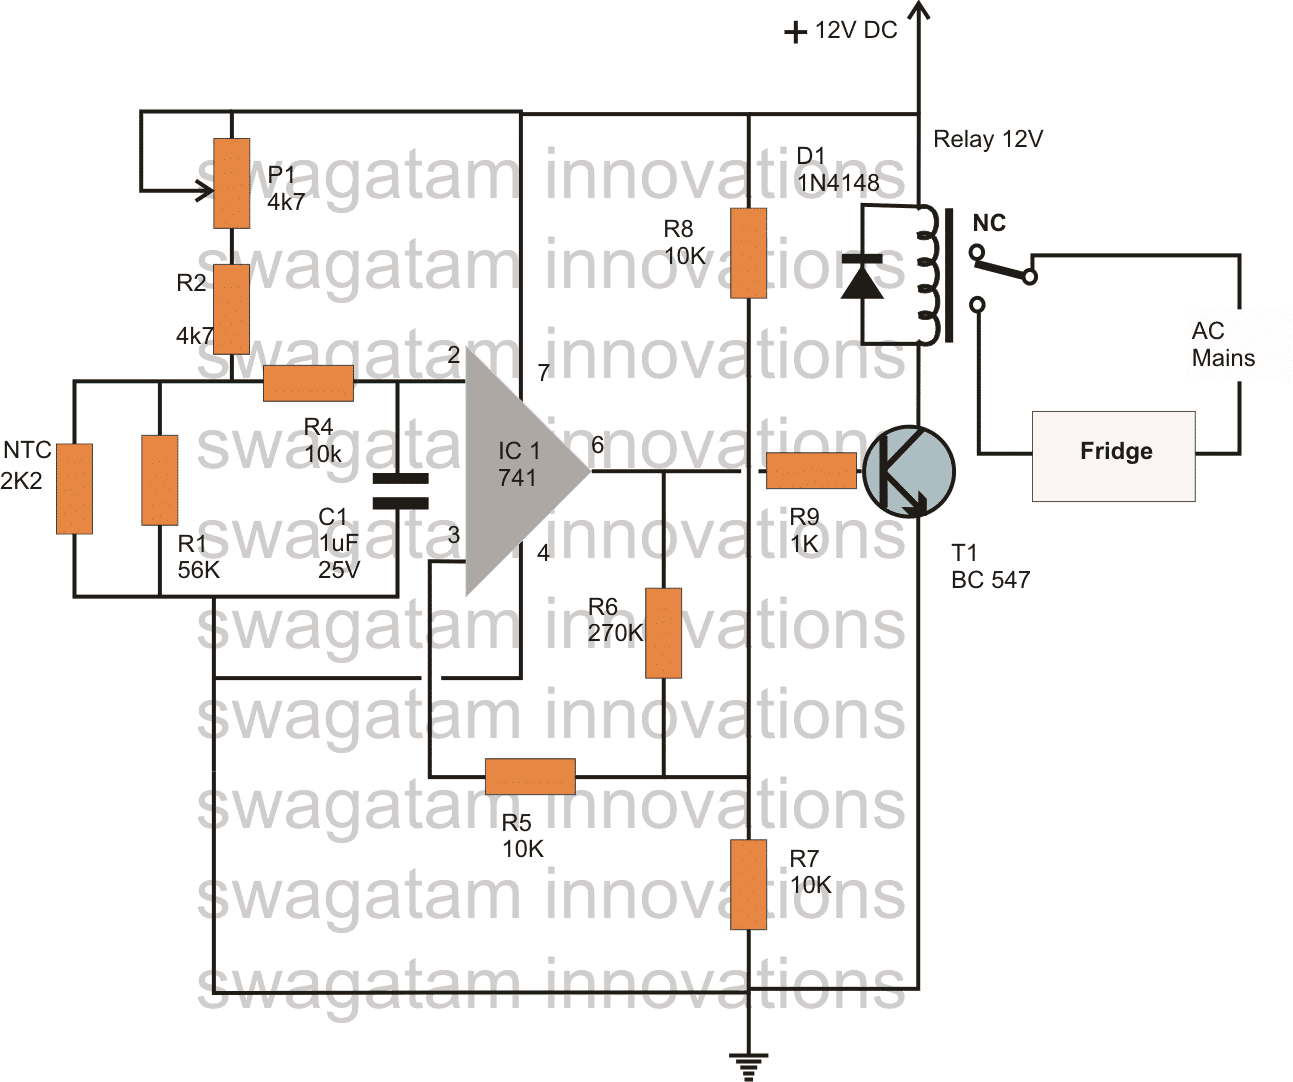 https://www.homemade-circuits.com/wp-content/uploads/2012/04/RefrigeratorTemperaturecontrollercircuit-1.png